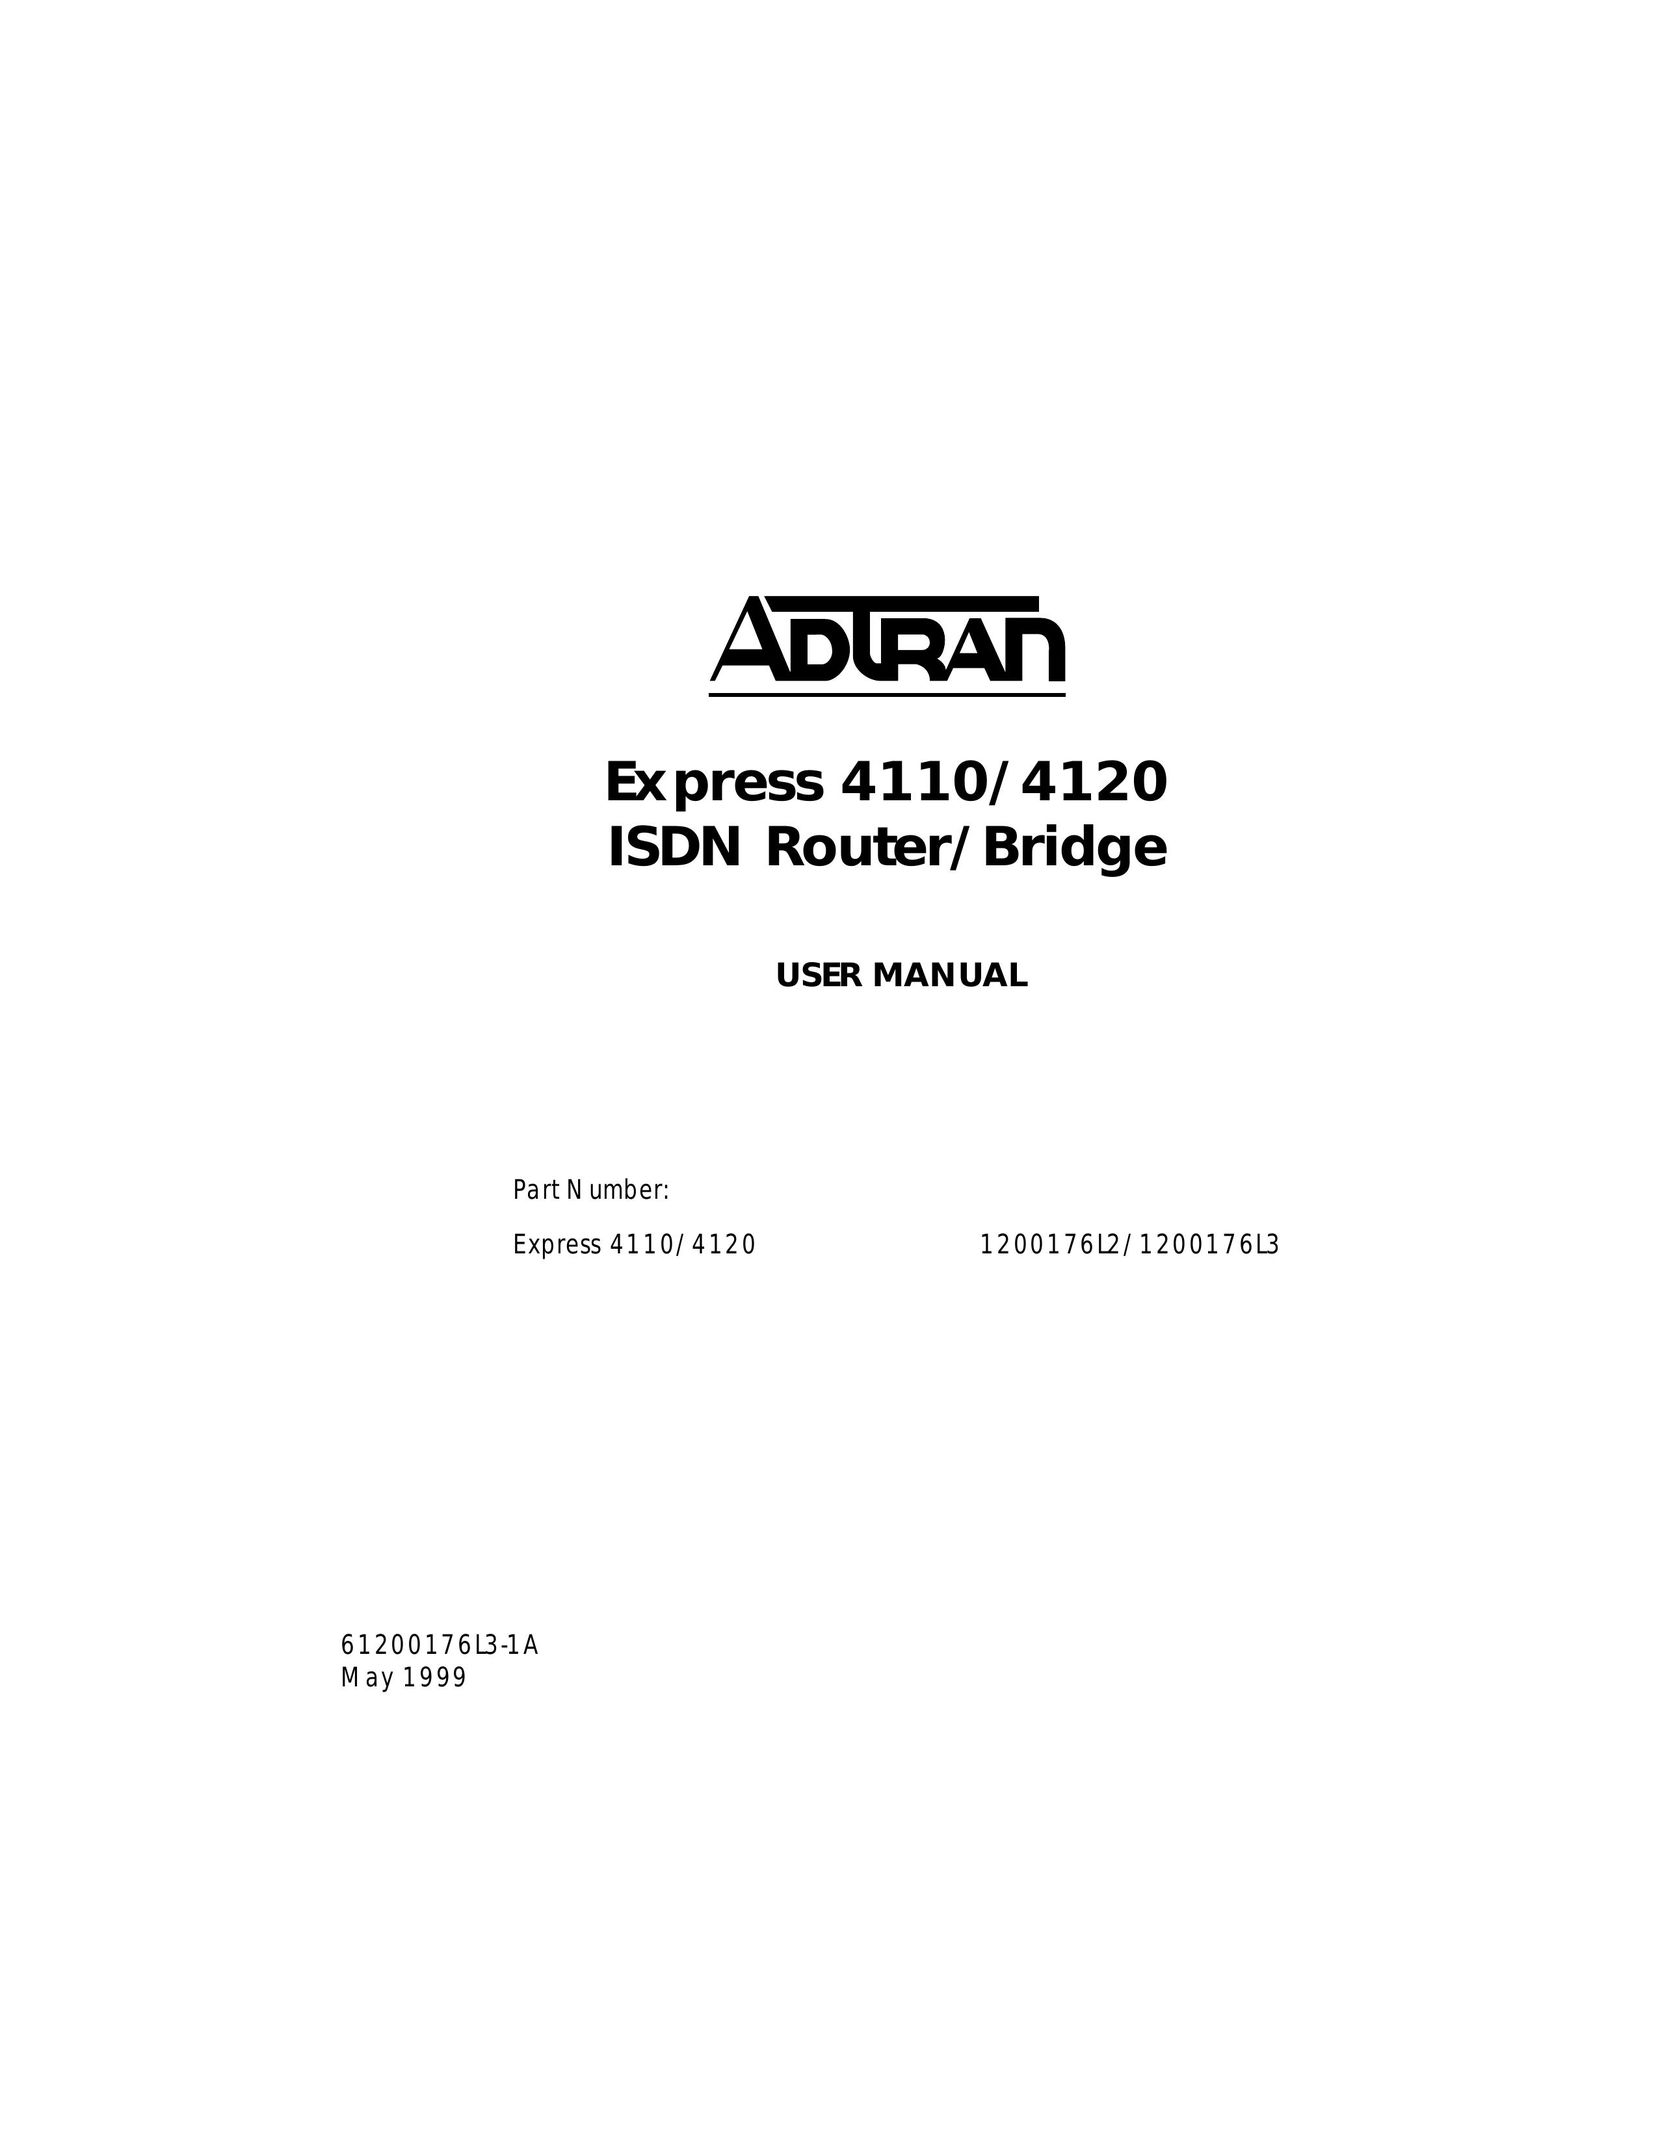 ADTRAN 4110 Network Router User Manual